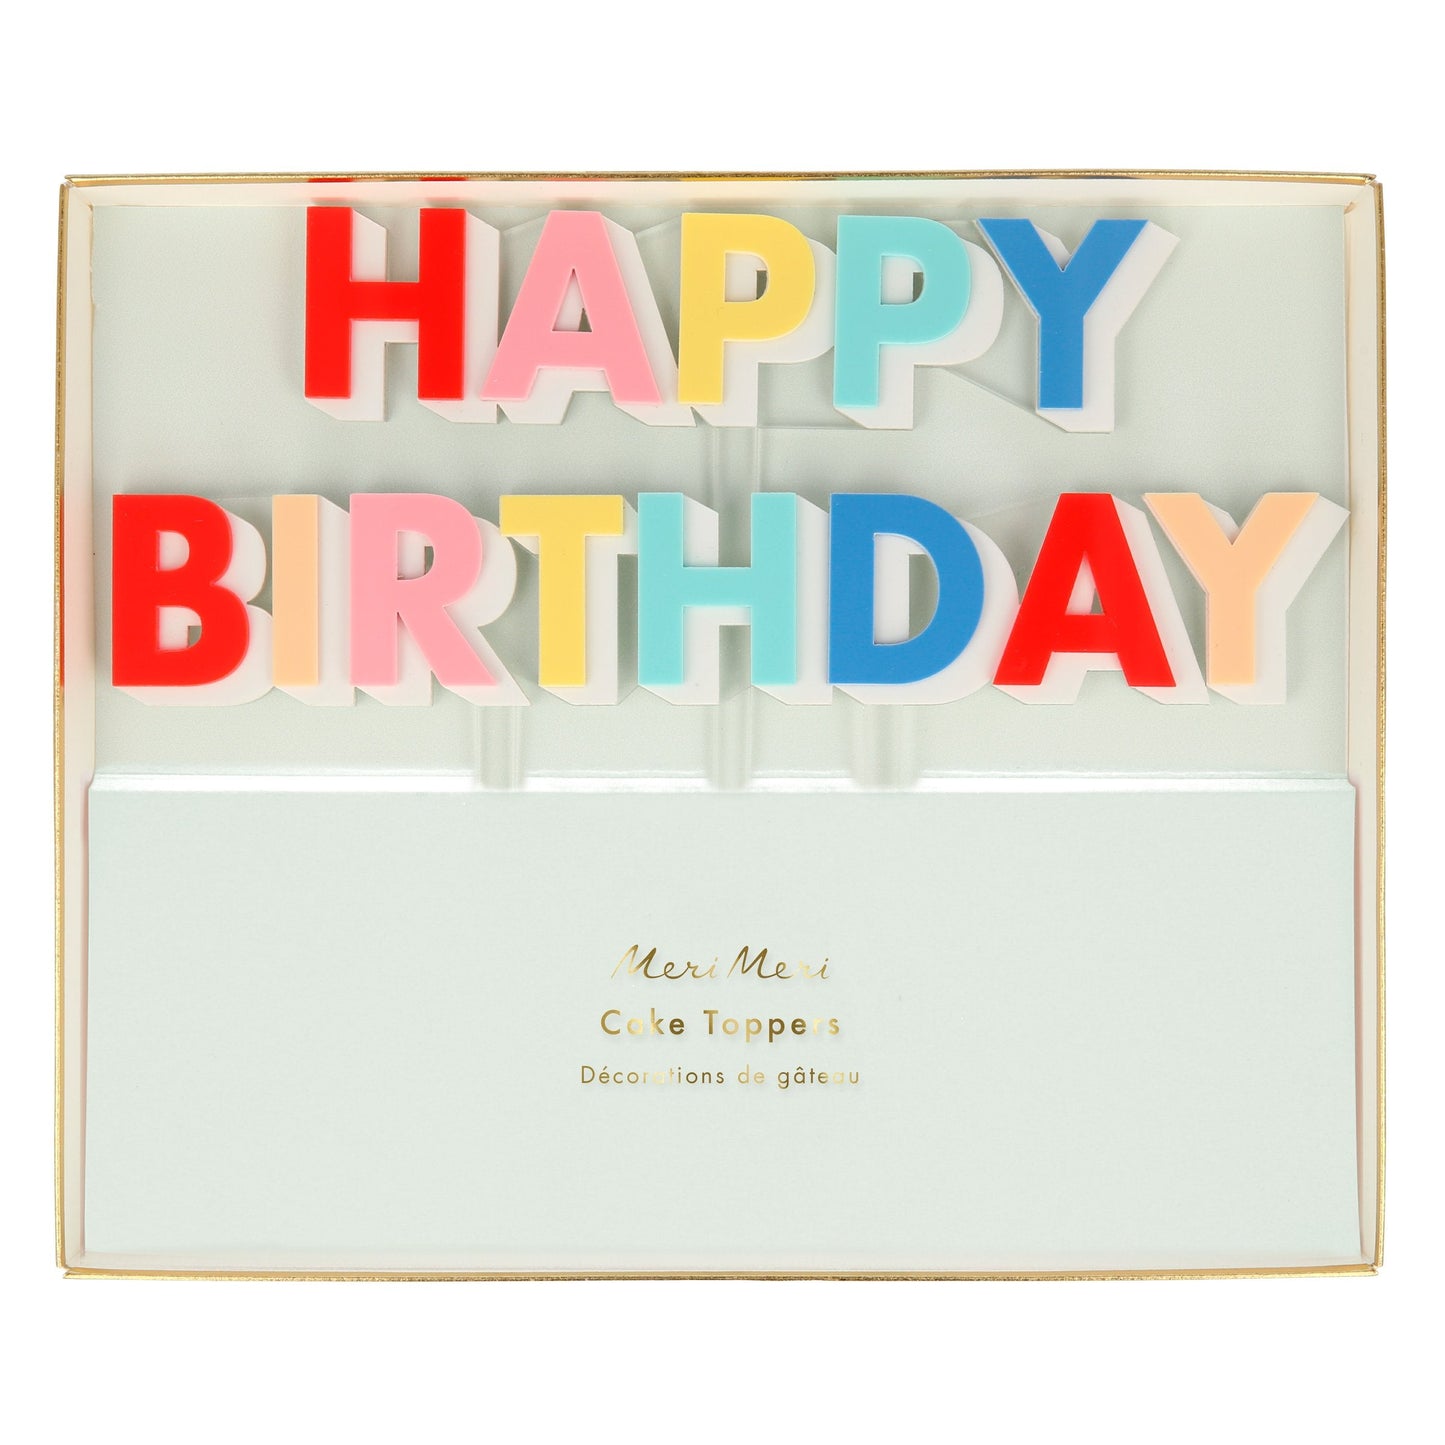 Happy Birthday Acrylic Cake Toppers (x 2)